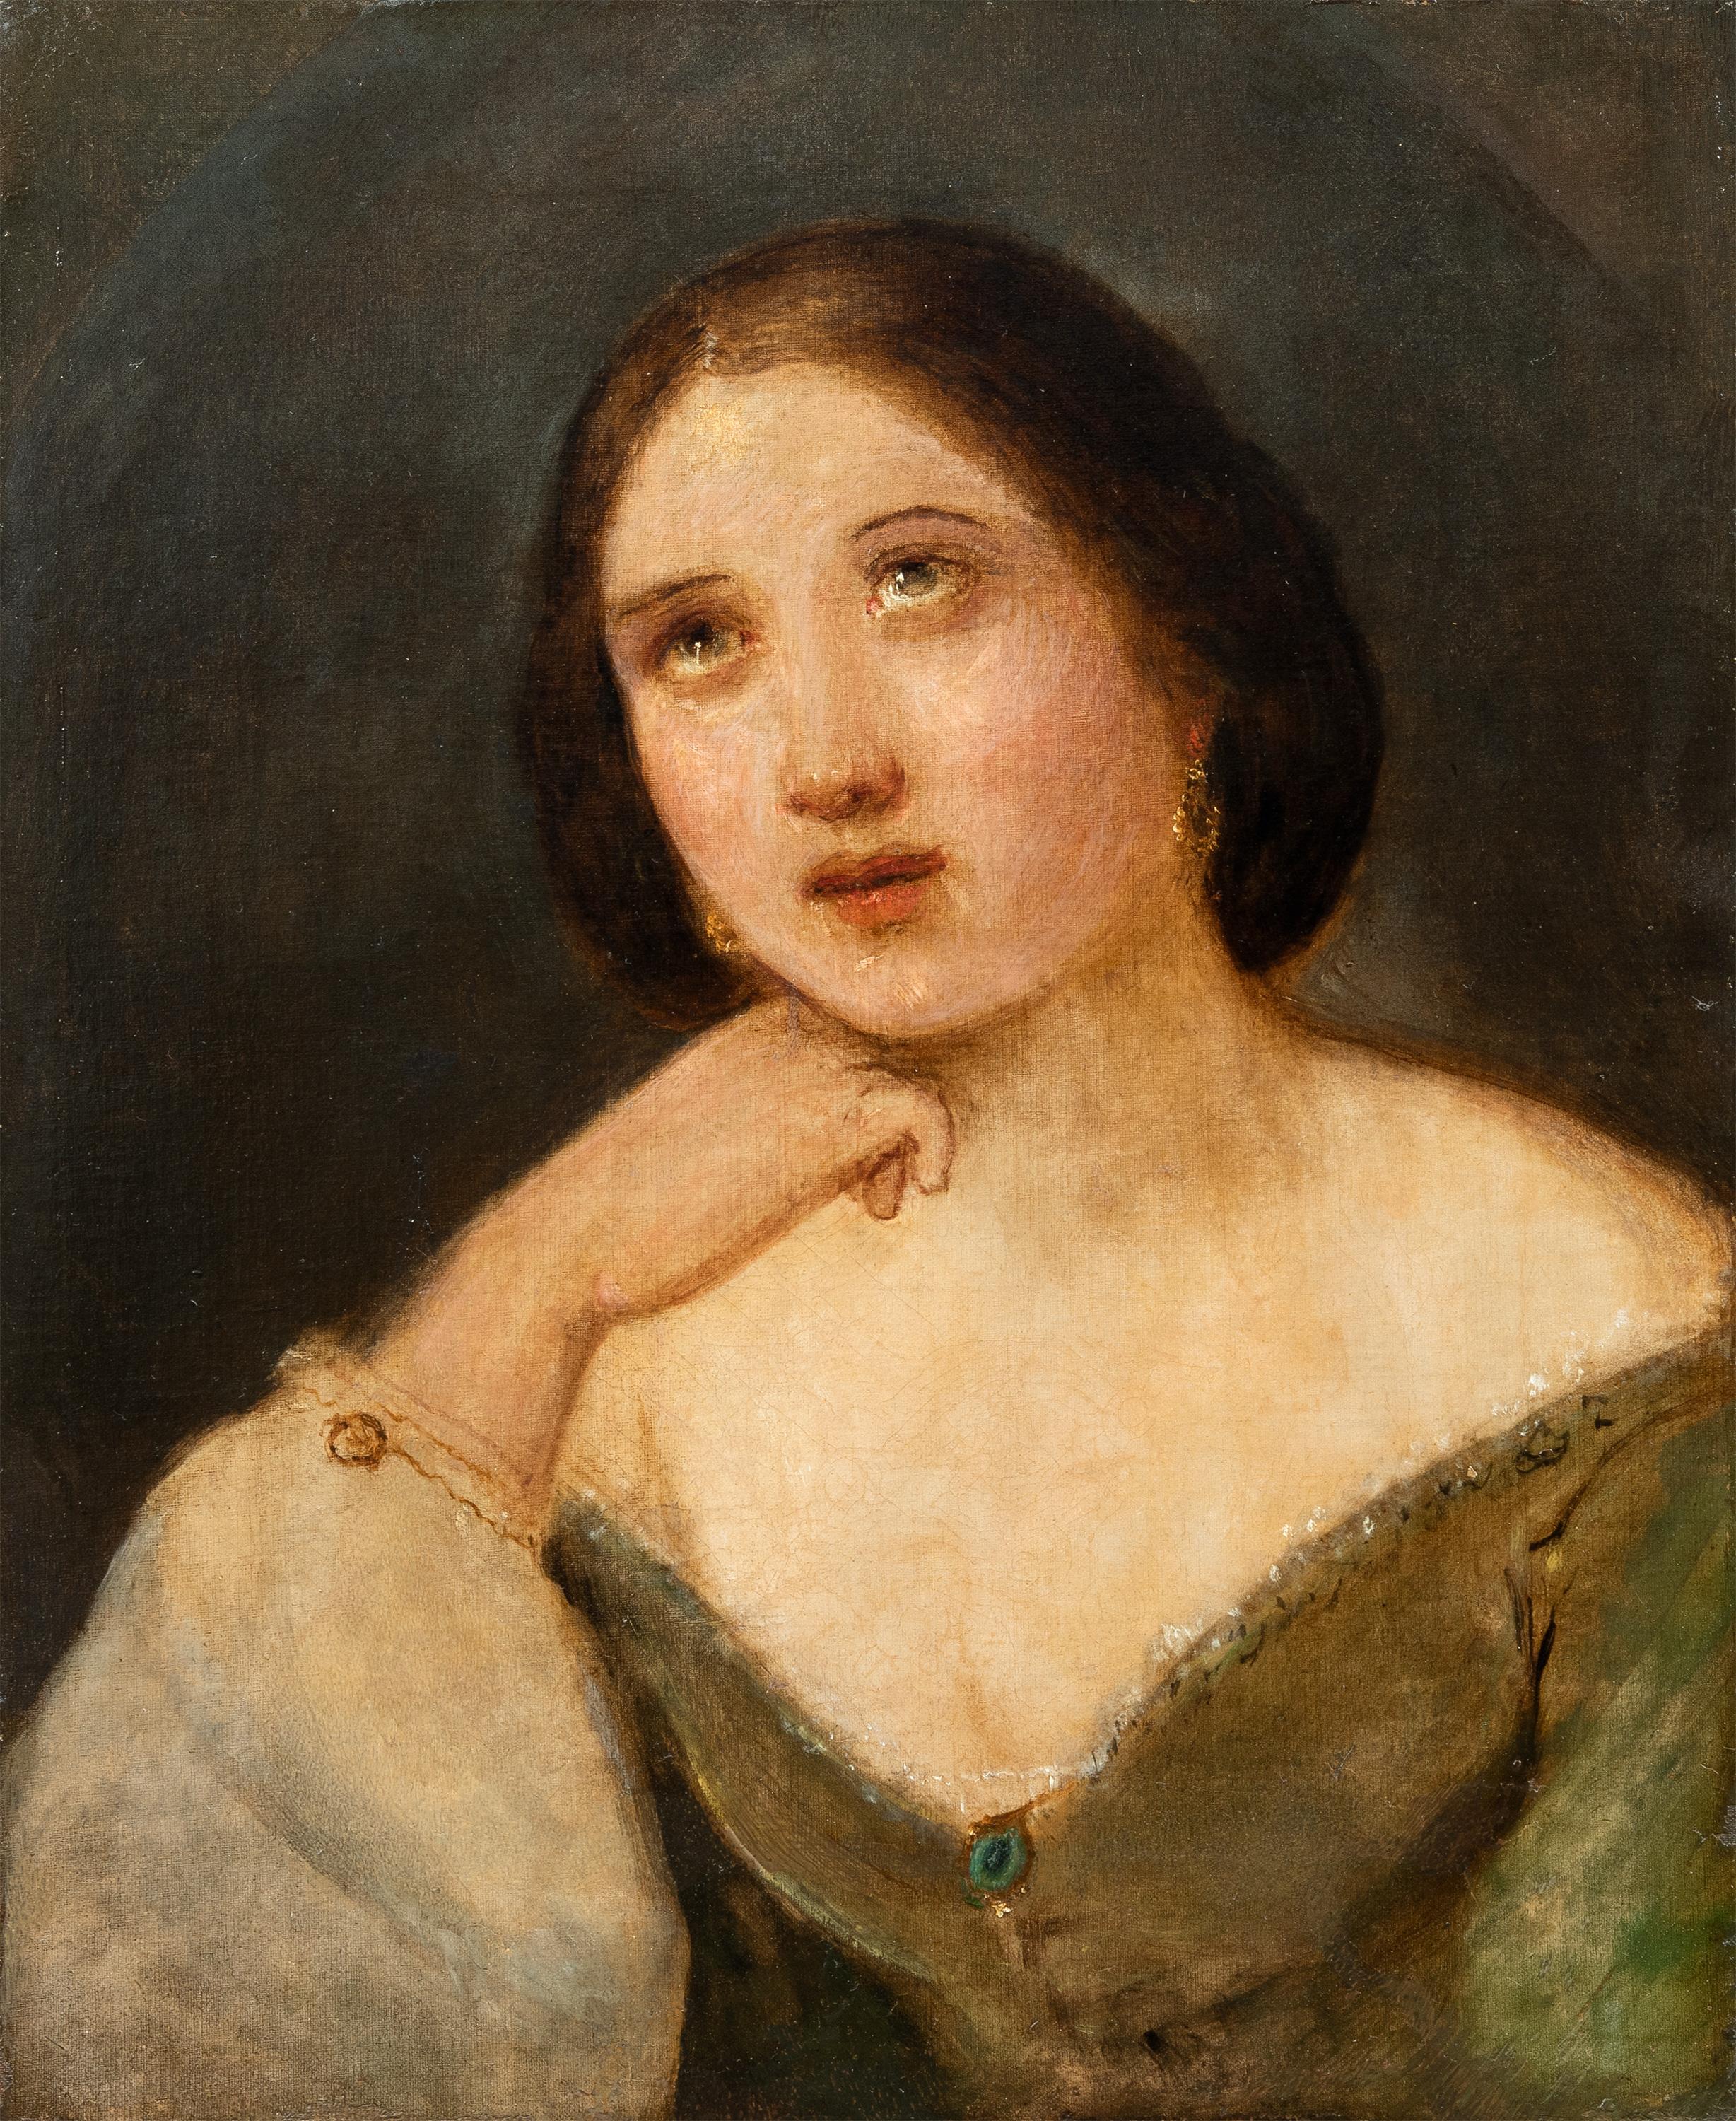 Unknown Portrait Painting – Romantik Italienischer Maler der Romantik - Figurenmalerei des 19. Jahrhunderts - Mädchenporträt 